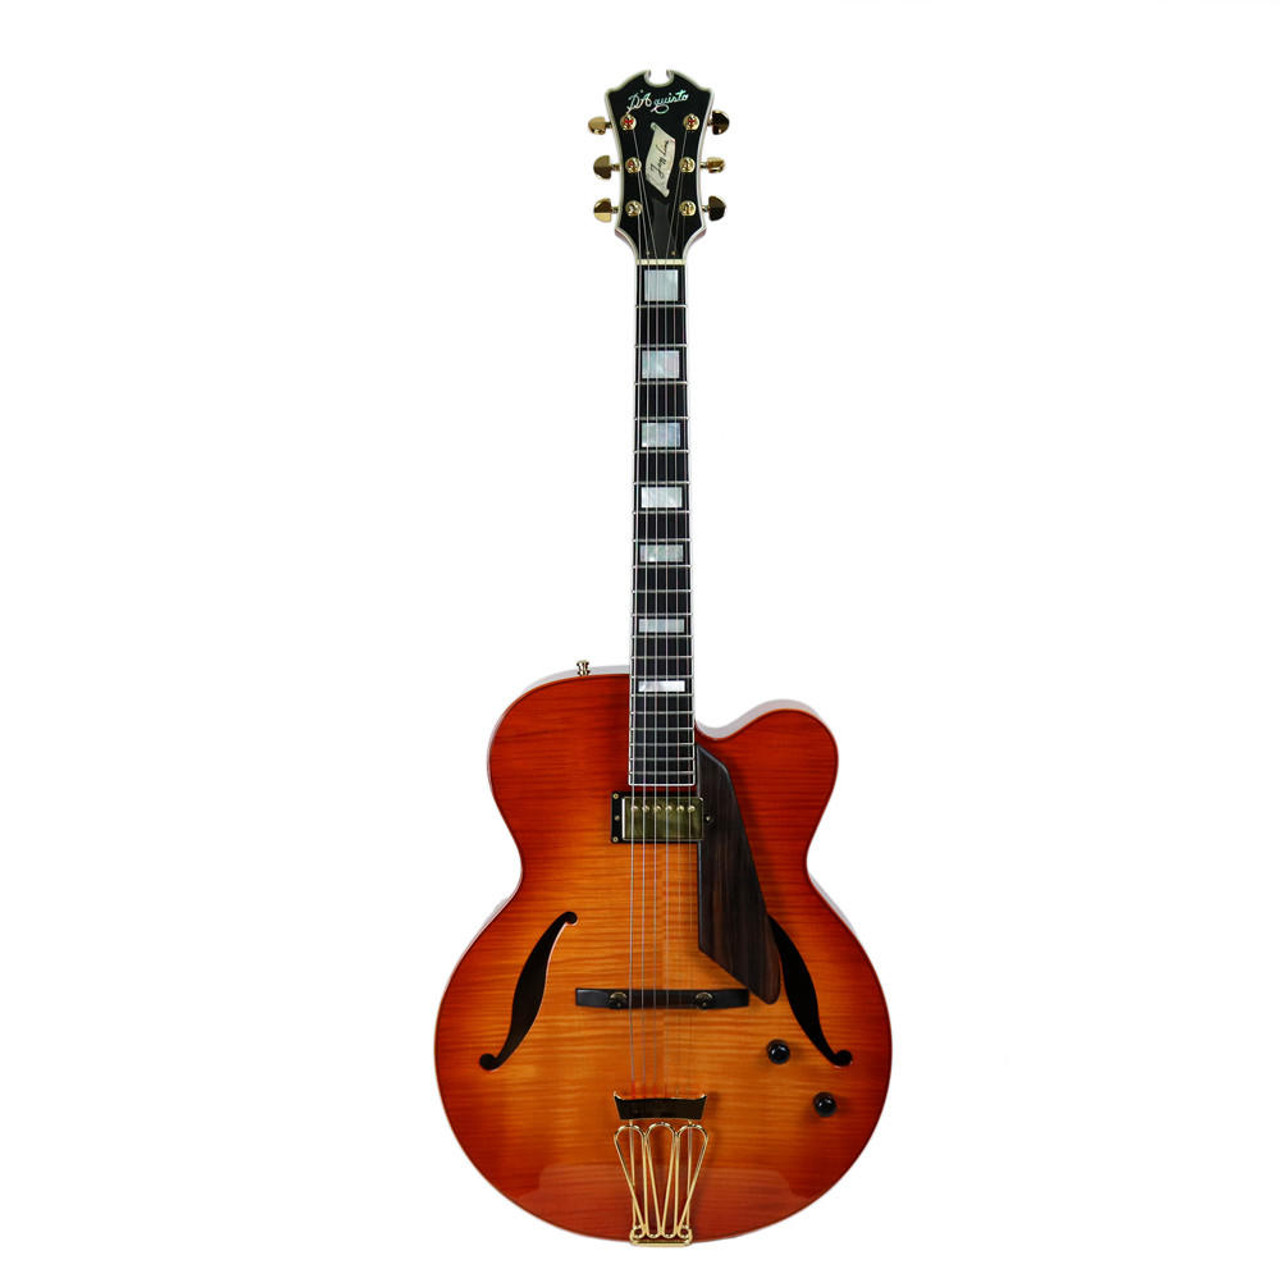 Used D'Aquisto Jazz Line Electric Archtop Guitar in Violin Sunburst Finish